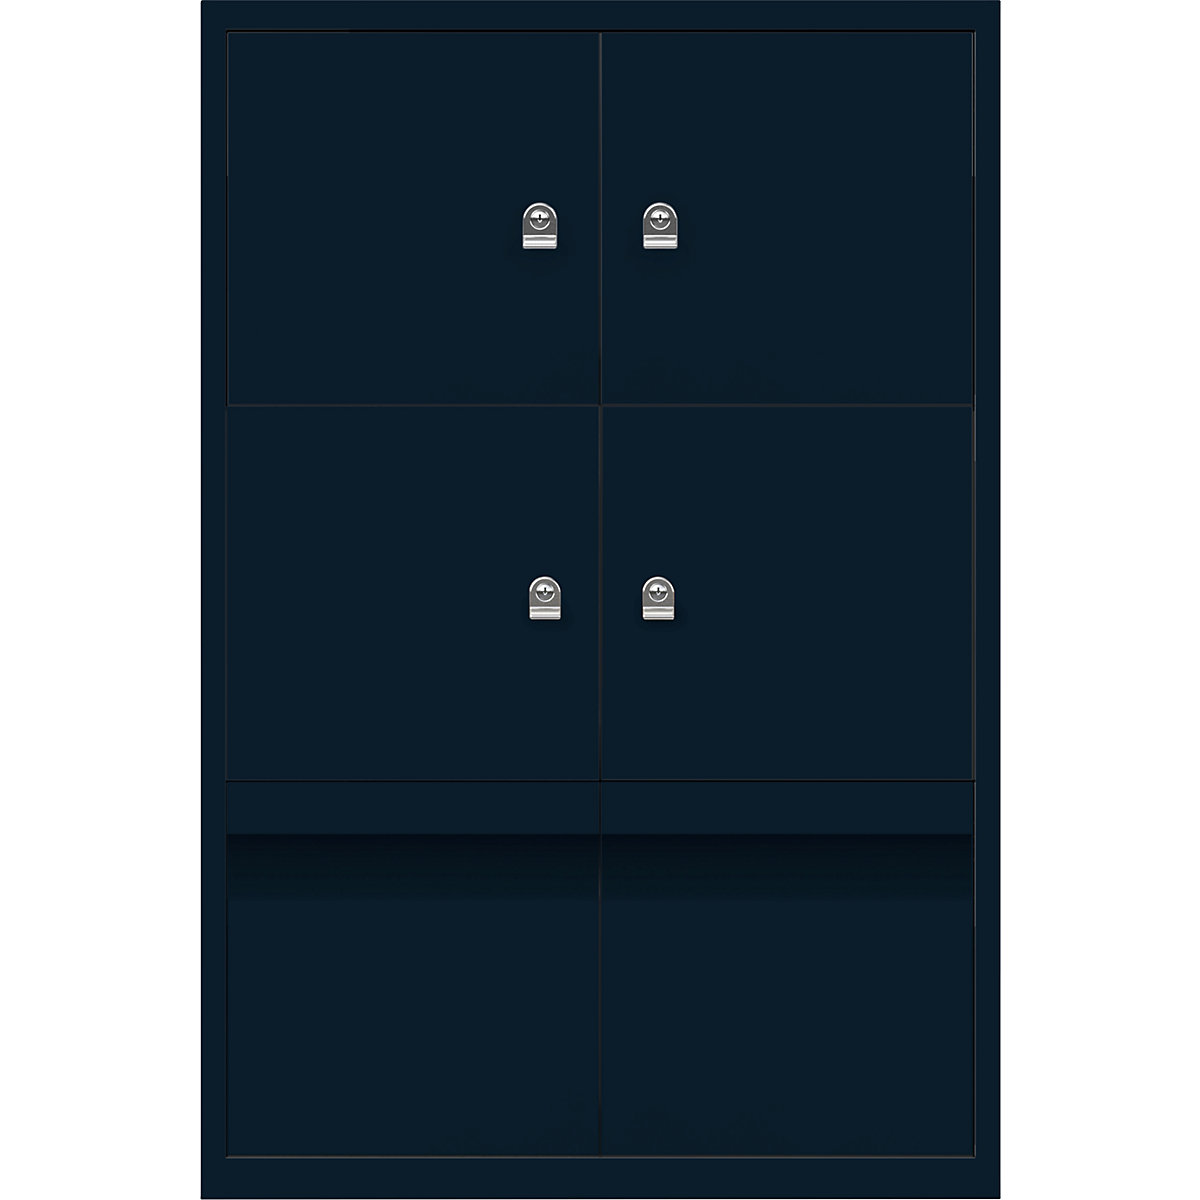 Armoire à casiers LateralFile™ – BISLEY, 4 casiers et 2 tiroirs hauteur 375 mm, prusse-16